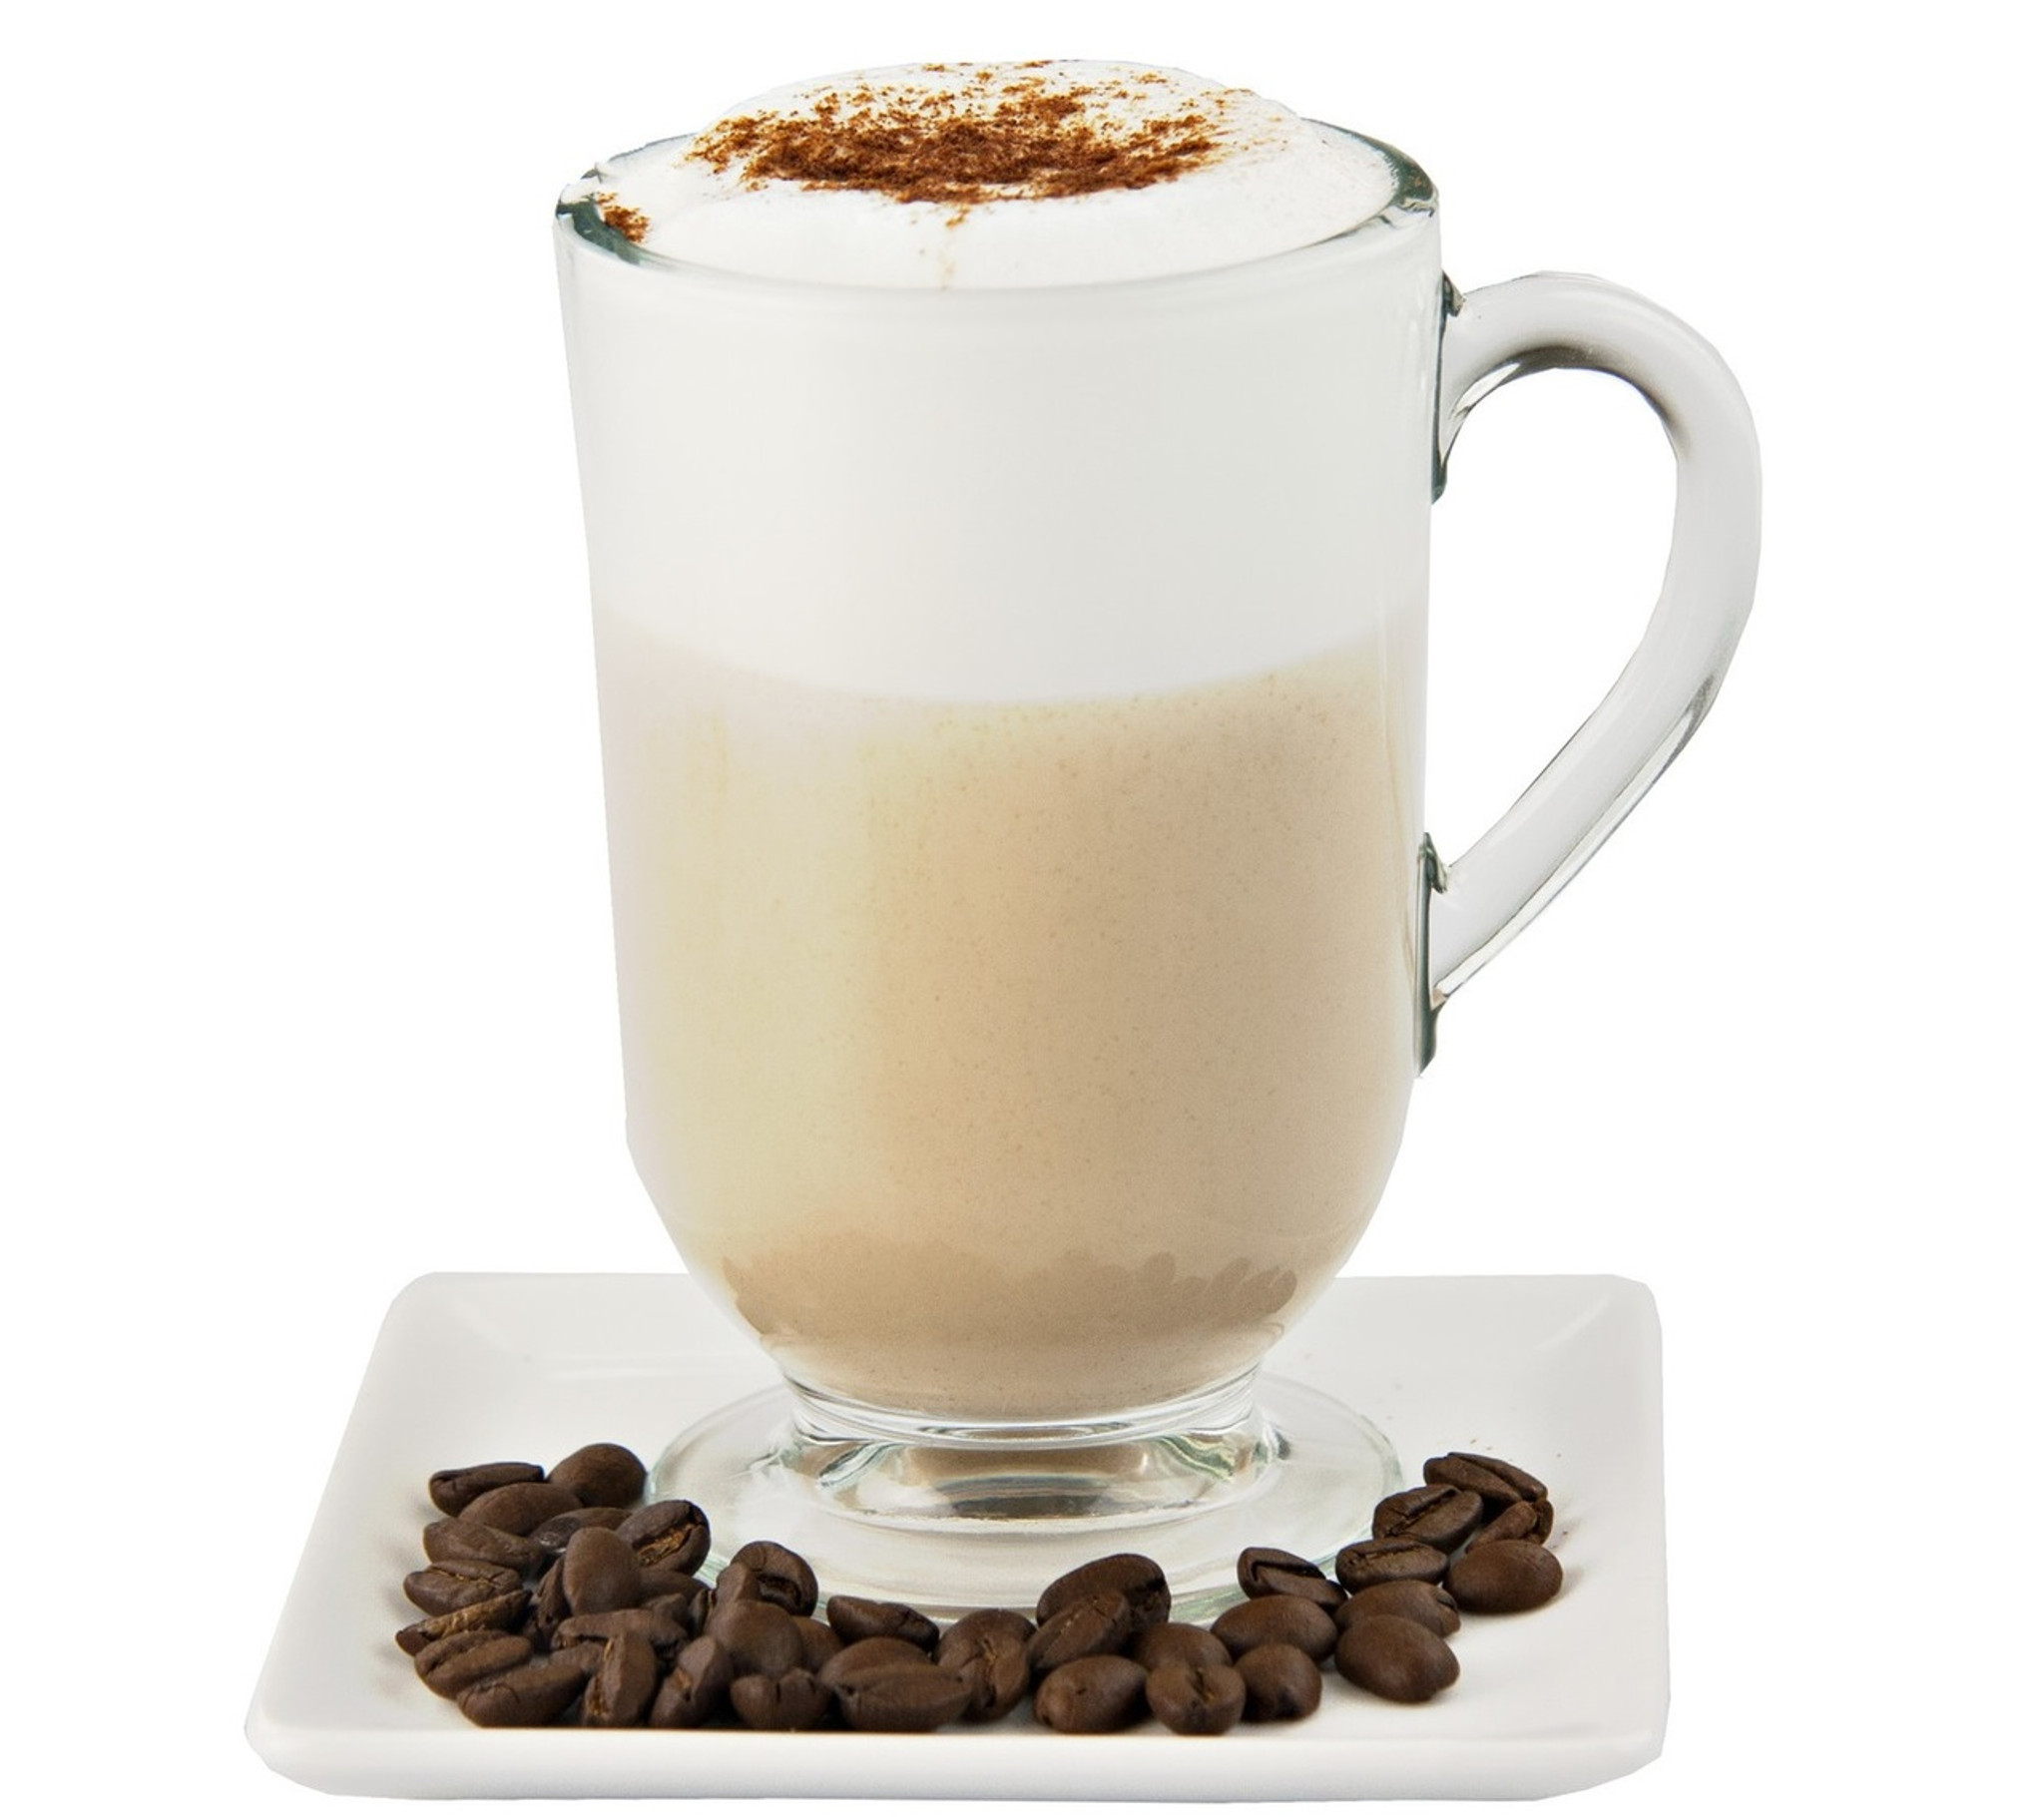 french vanilla cappuccino mix